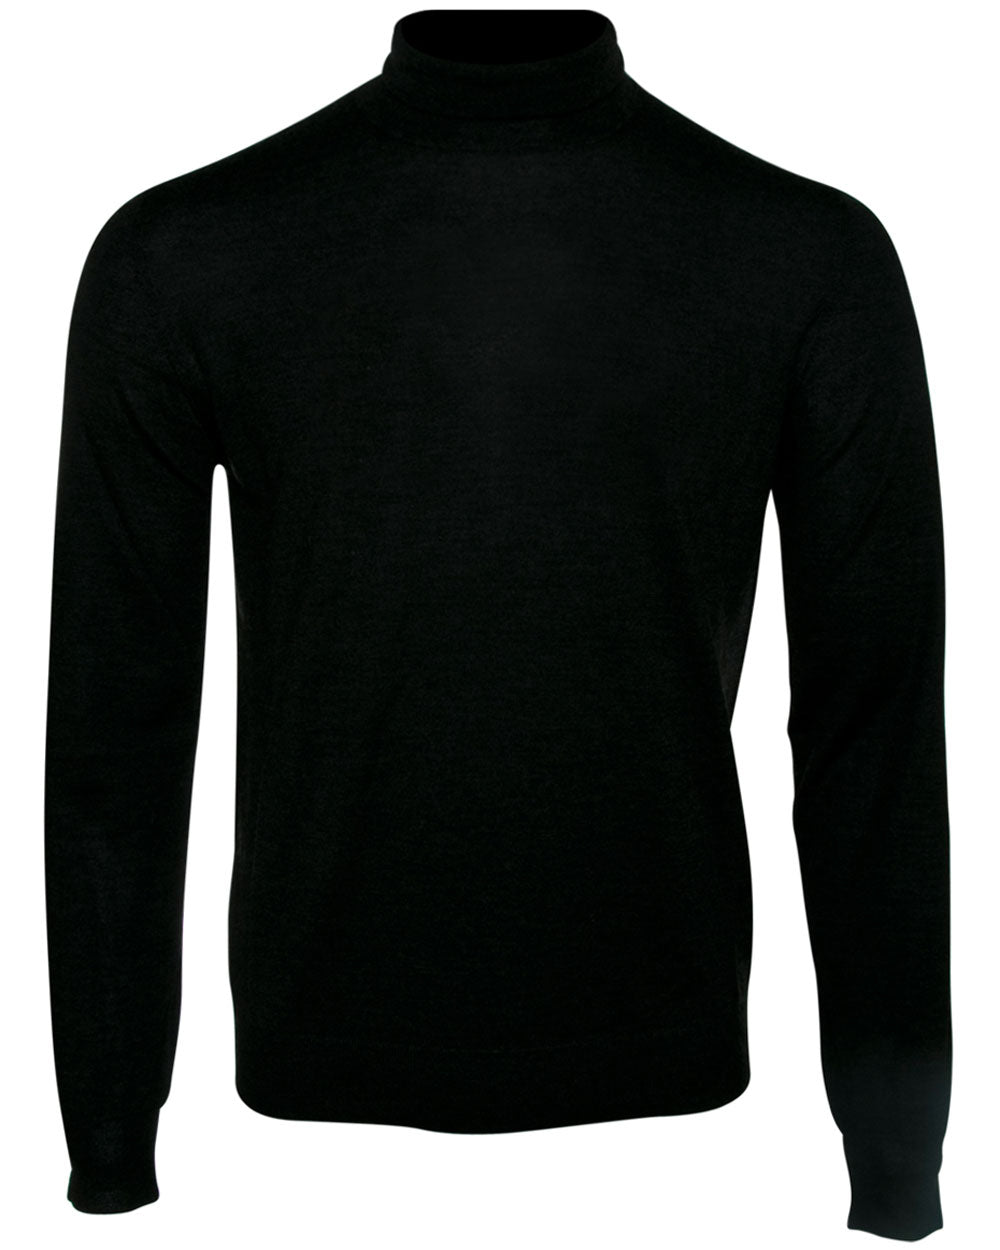 Black Light Cashsilk Sweater